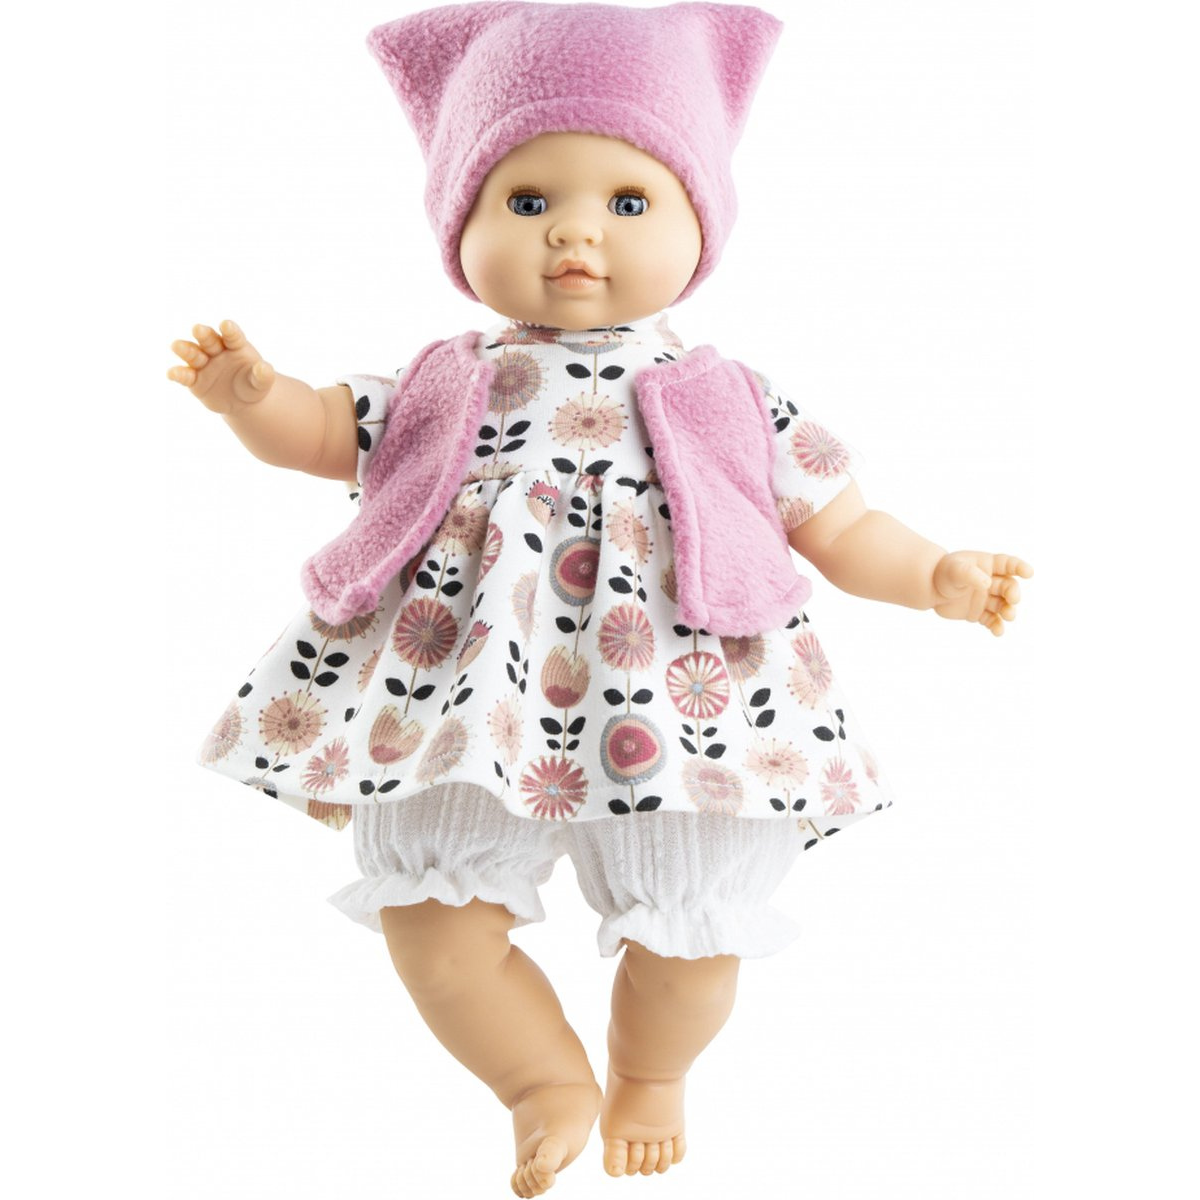 Spanish doll Bobas Paola Reina 07046